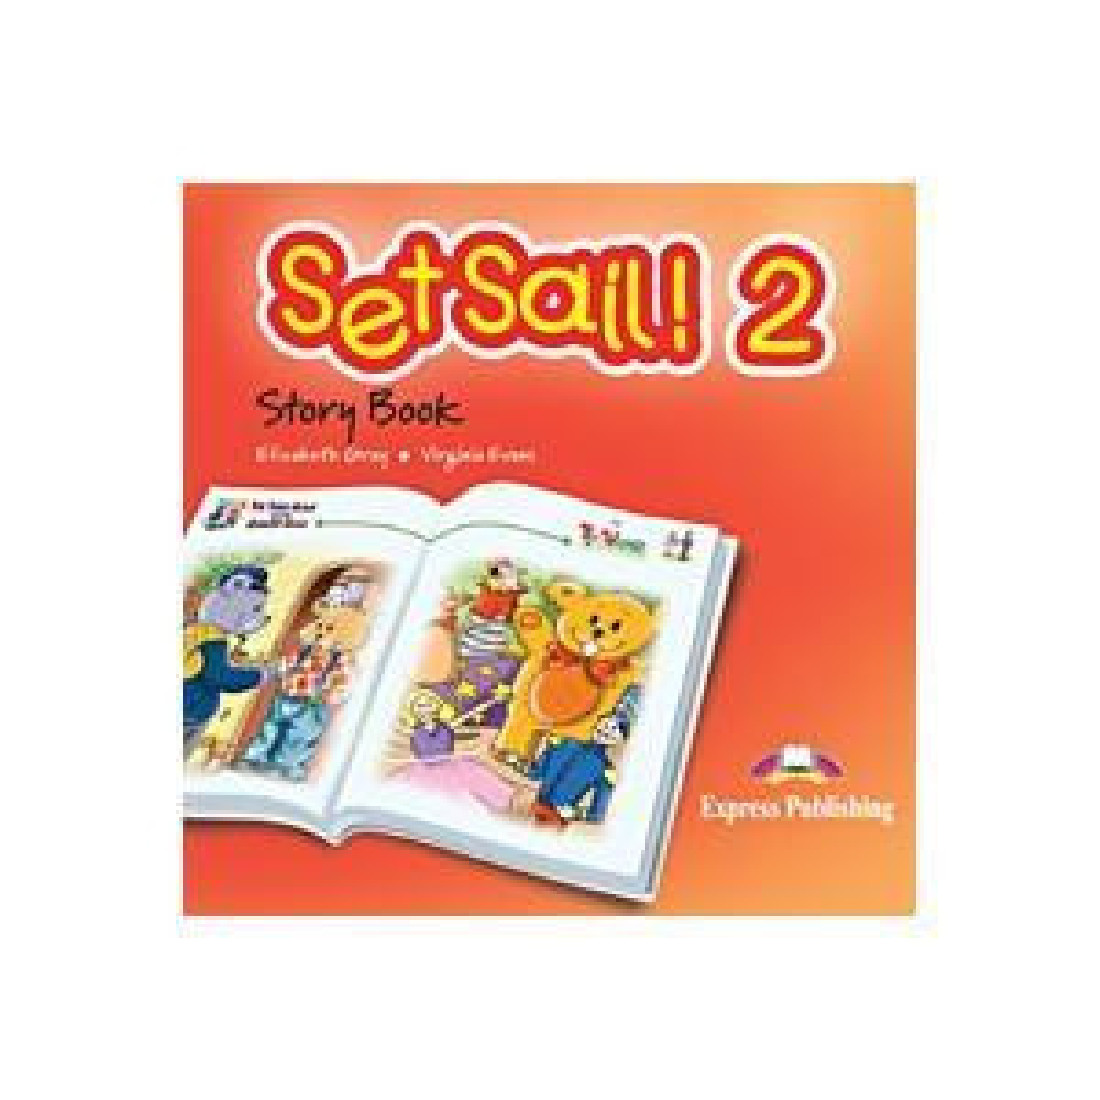 SET SAIL! 2 STORY BOOK CD